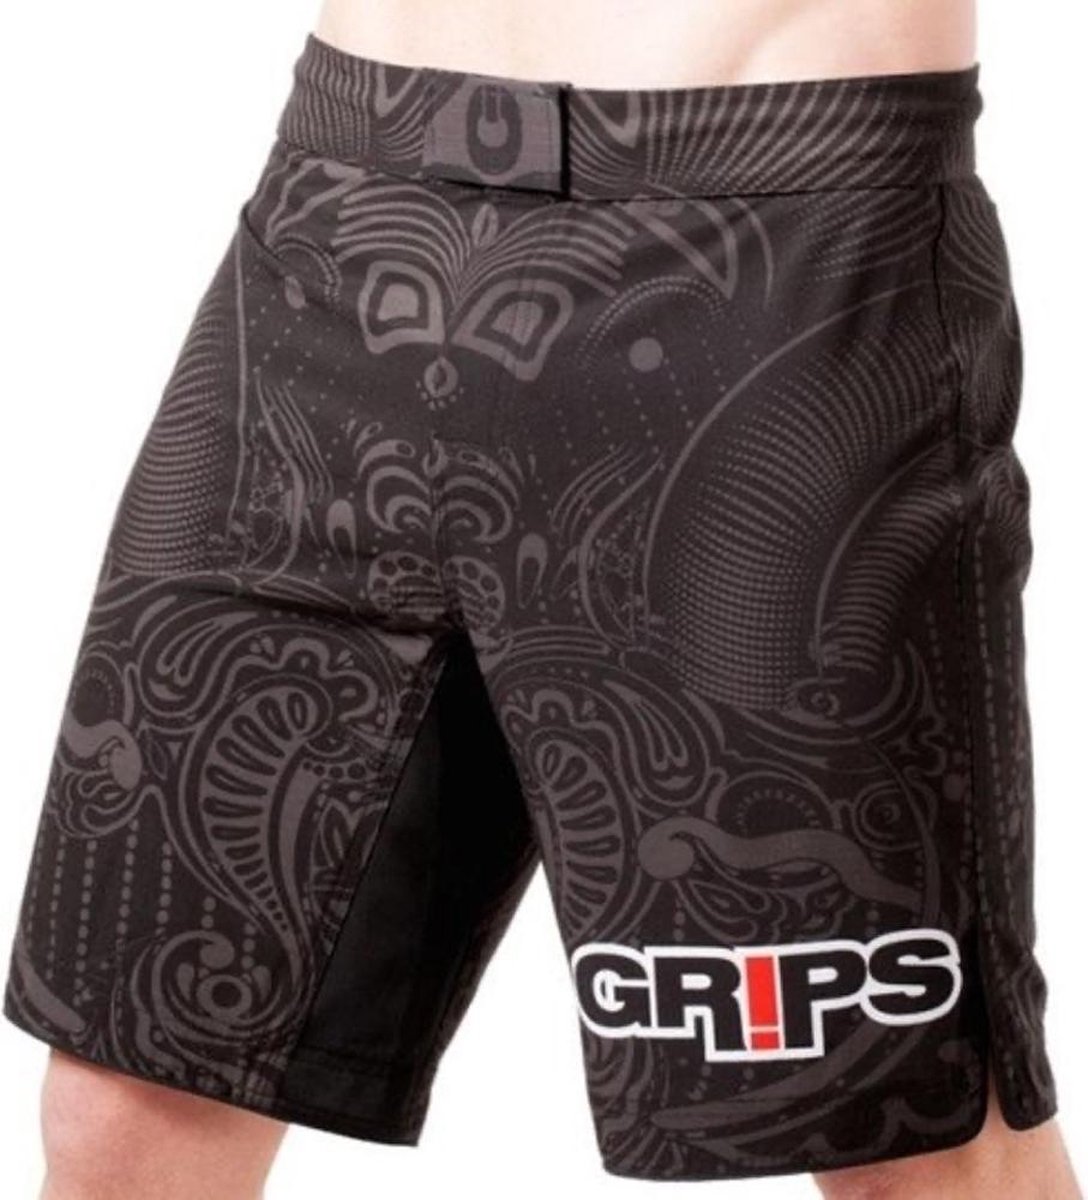 GRIPS Warrior's Instinct MMA / BJJ Fight Shorts S - Jeans Maat 30